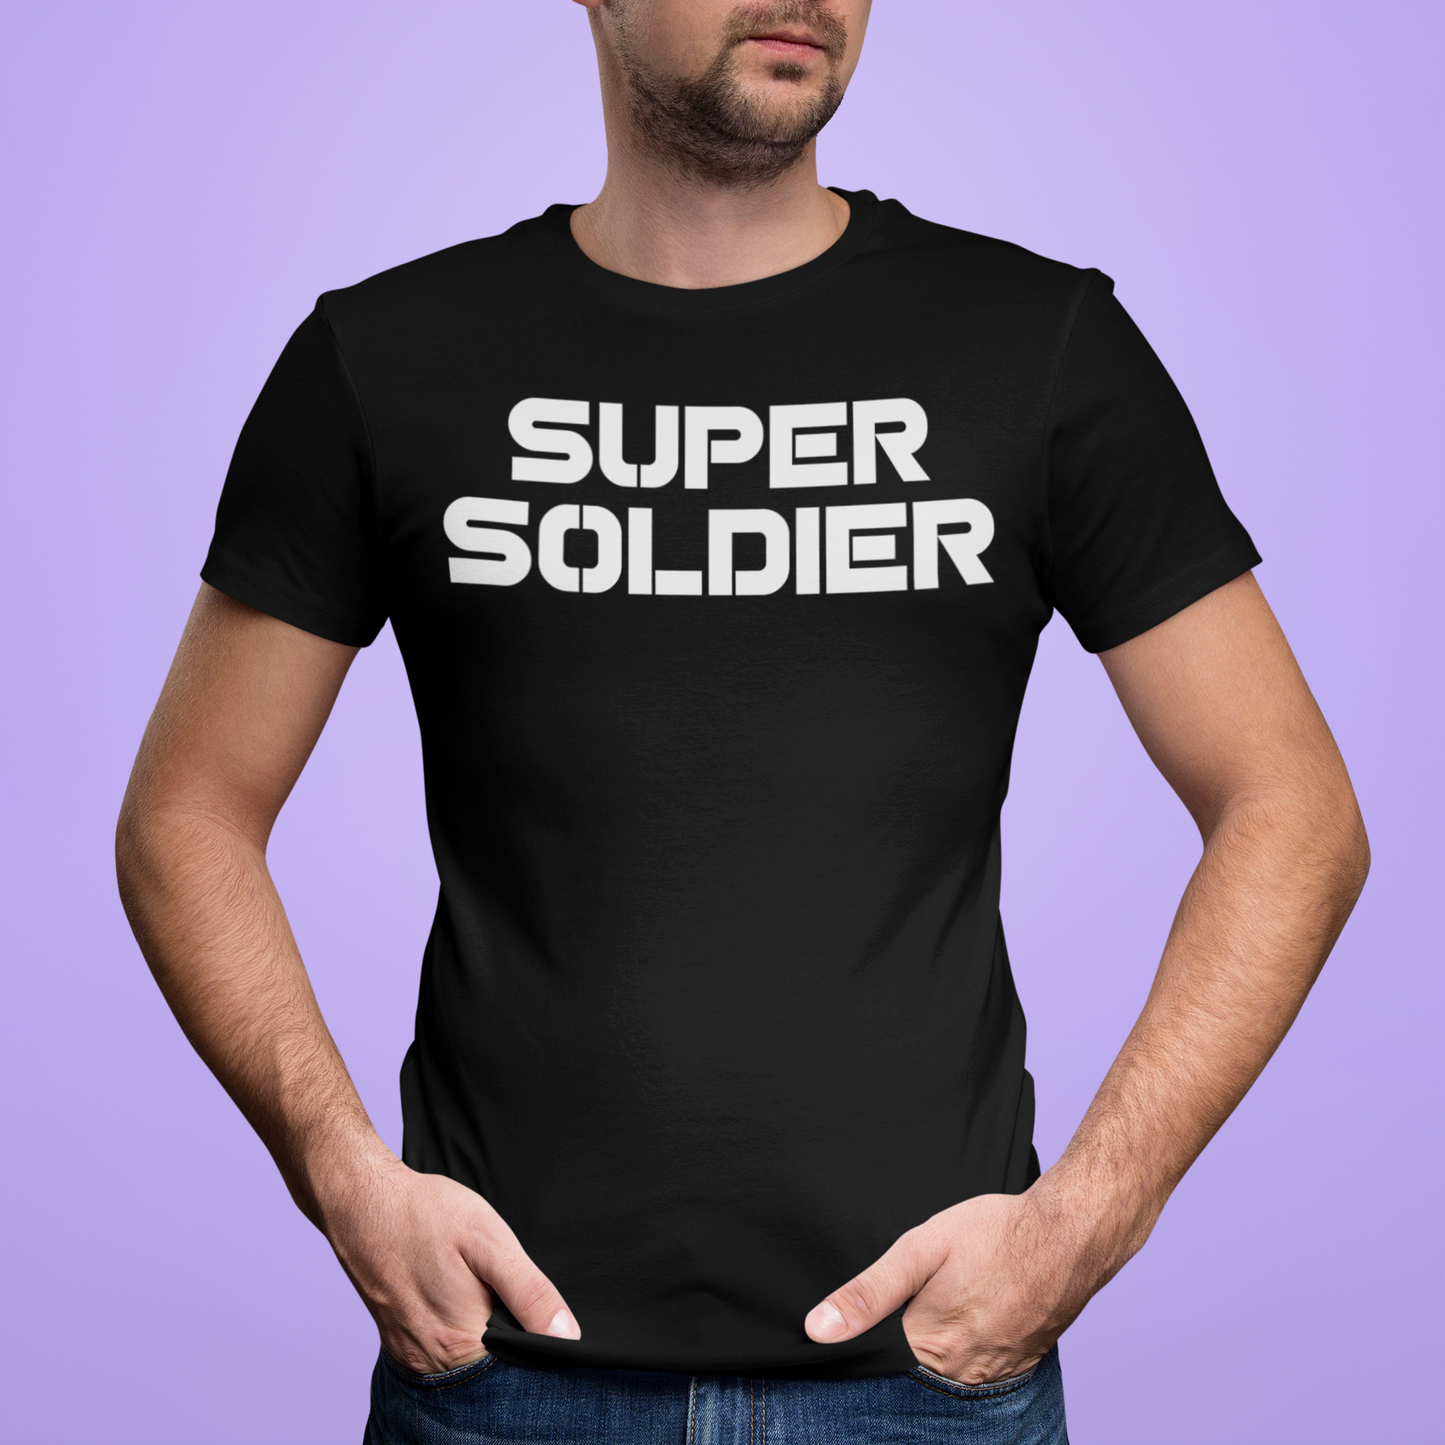 Super Soldier Premium T-Shirt